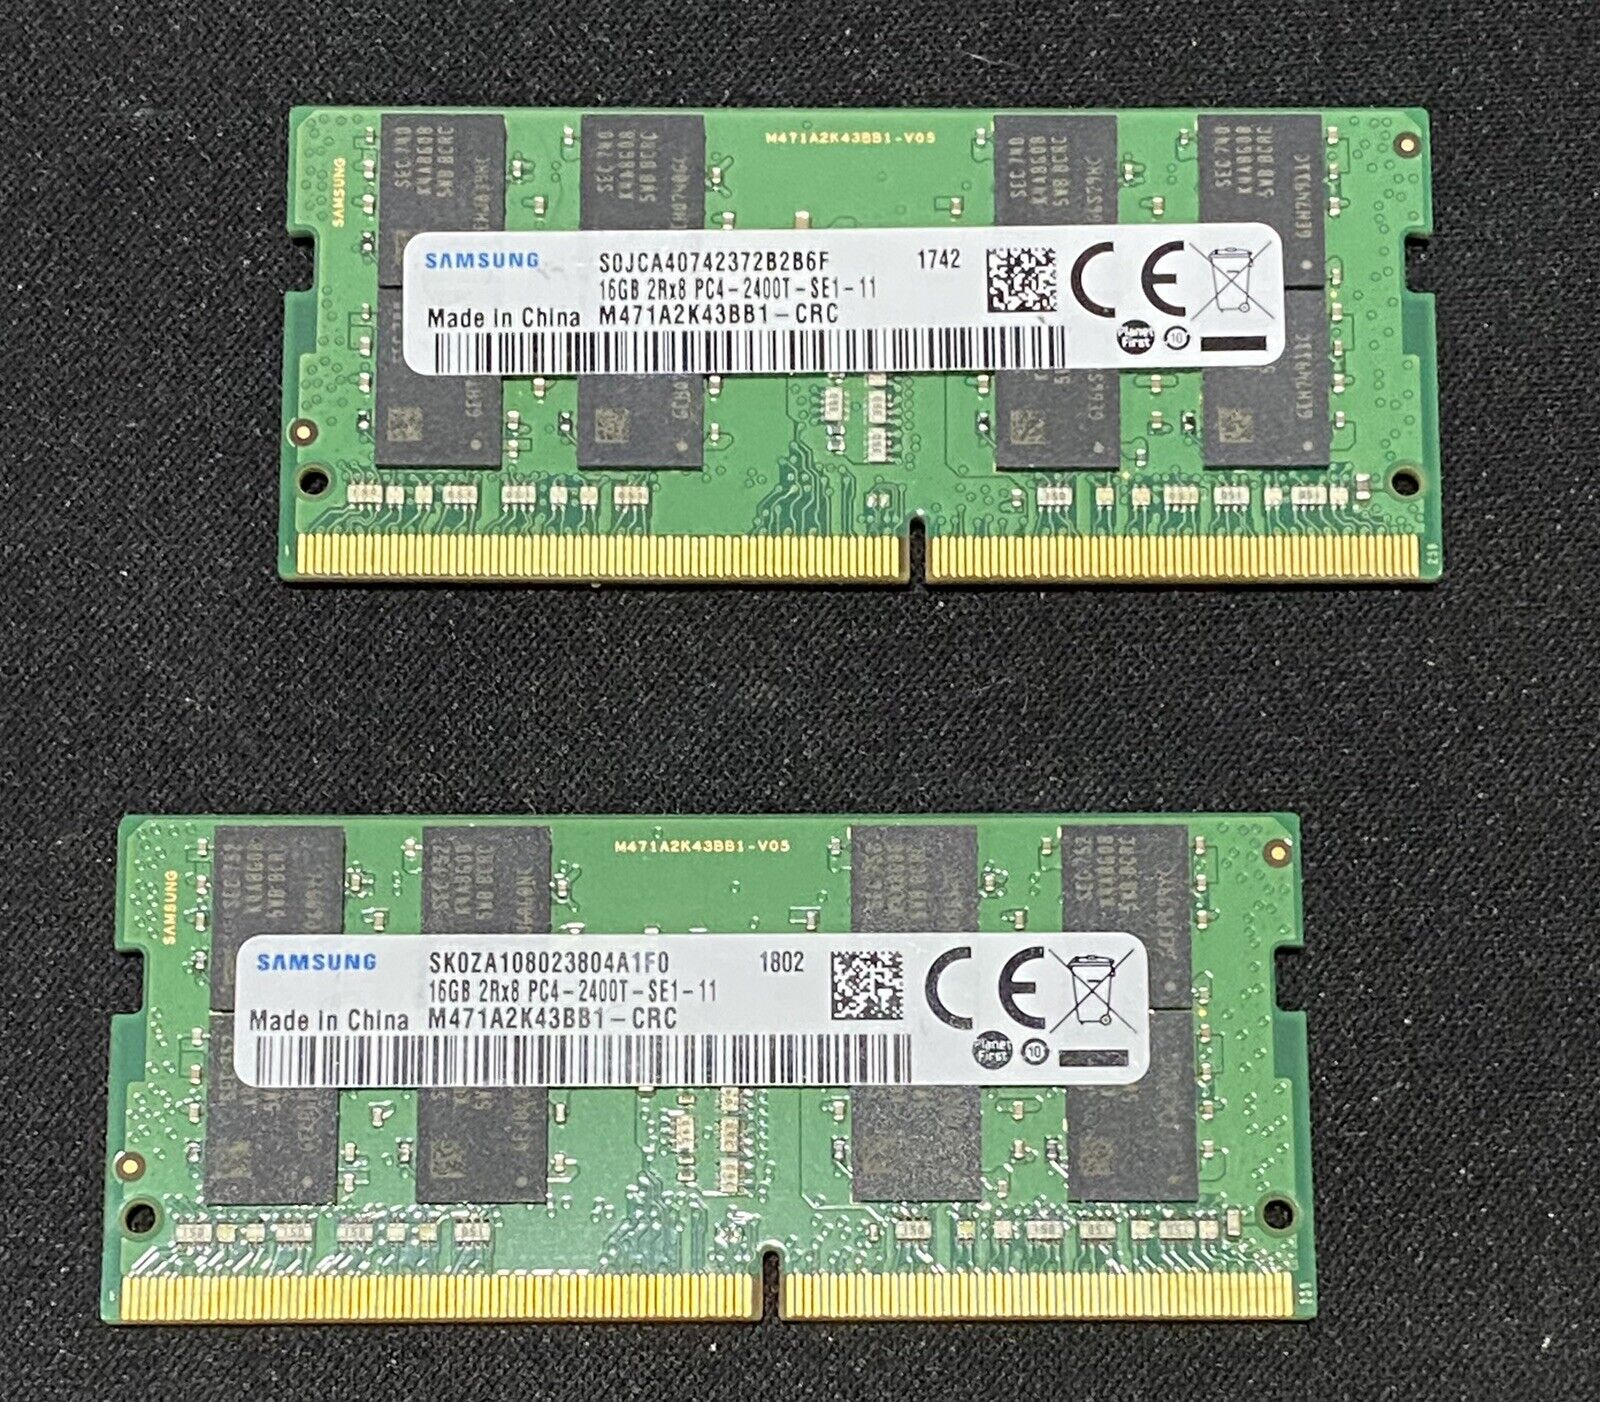 Samsung 32GB (2x16GB) PC4-2400T DDR4 Laptop Memory RAM 19200S SODIMM Upgrade KIT